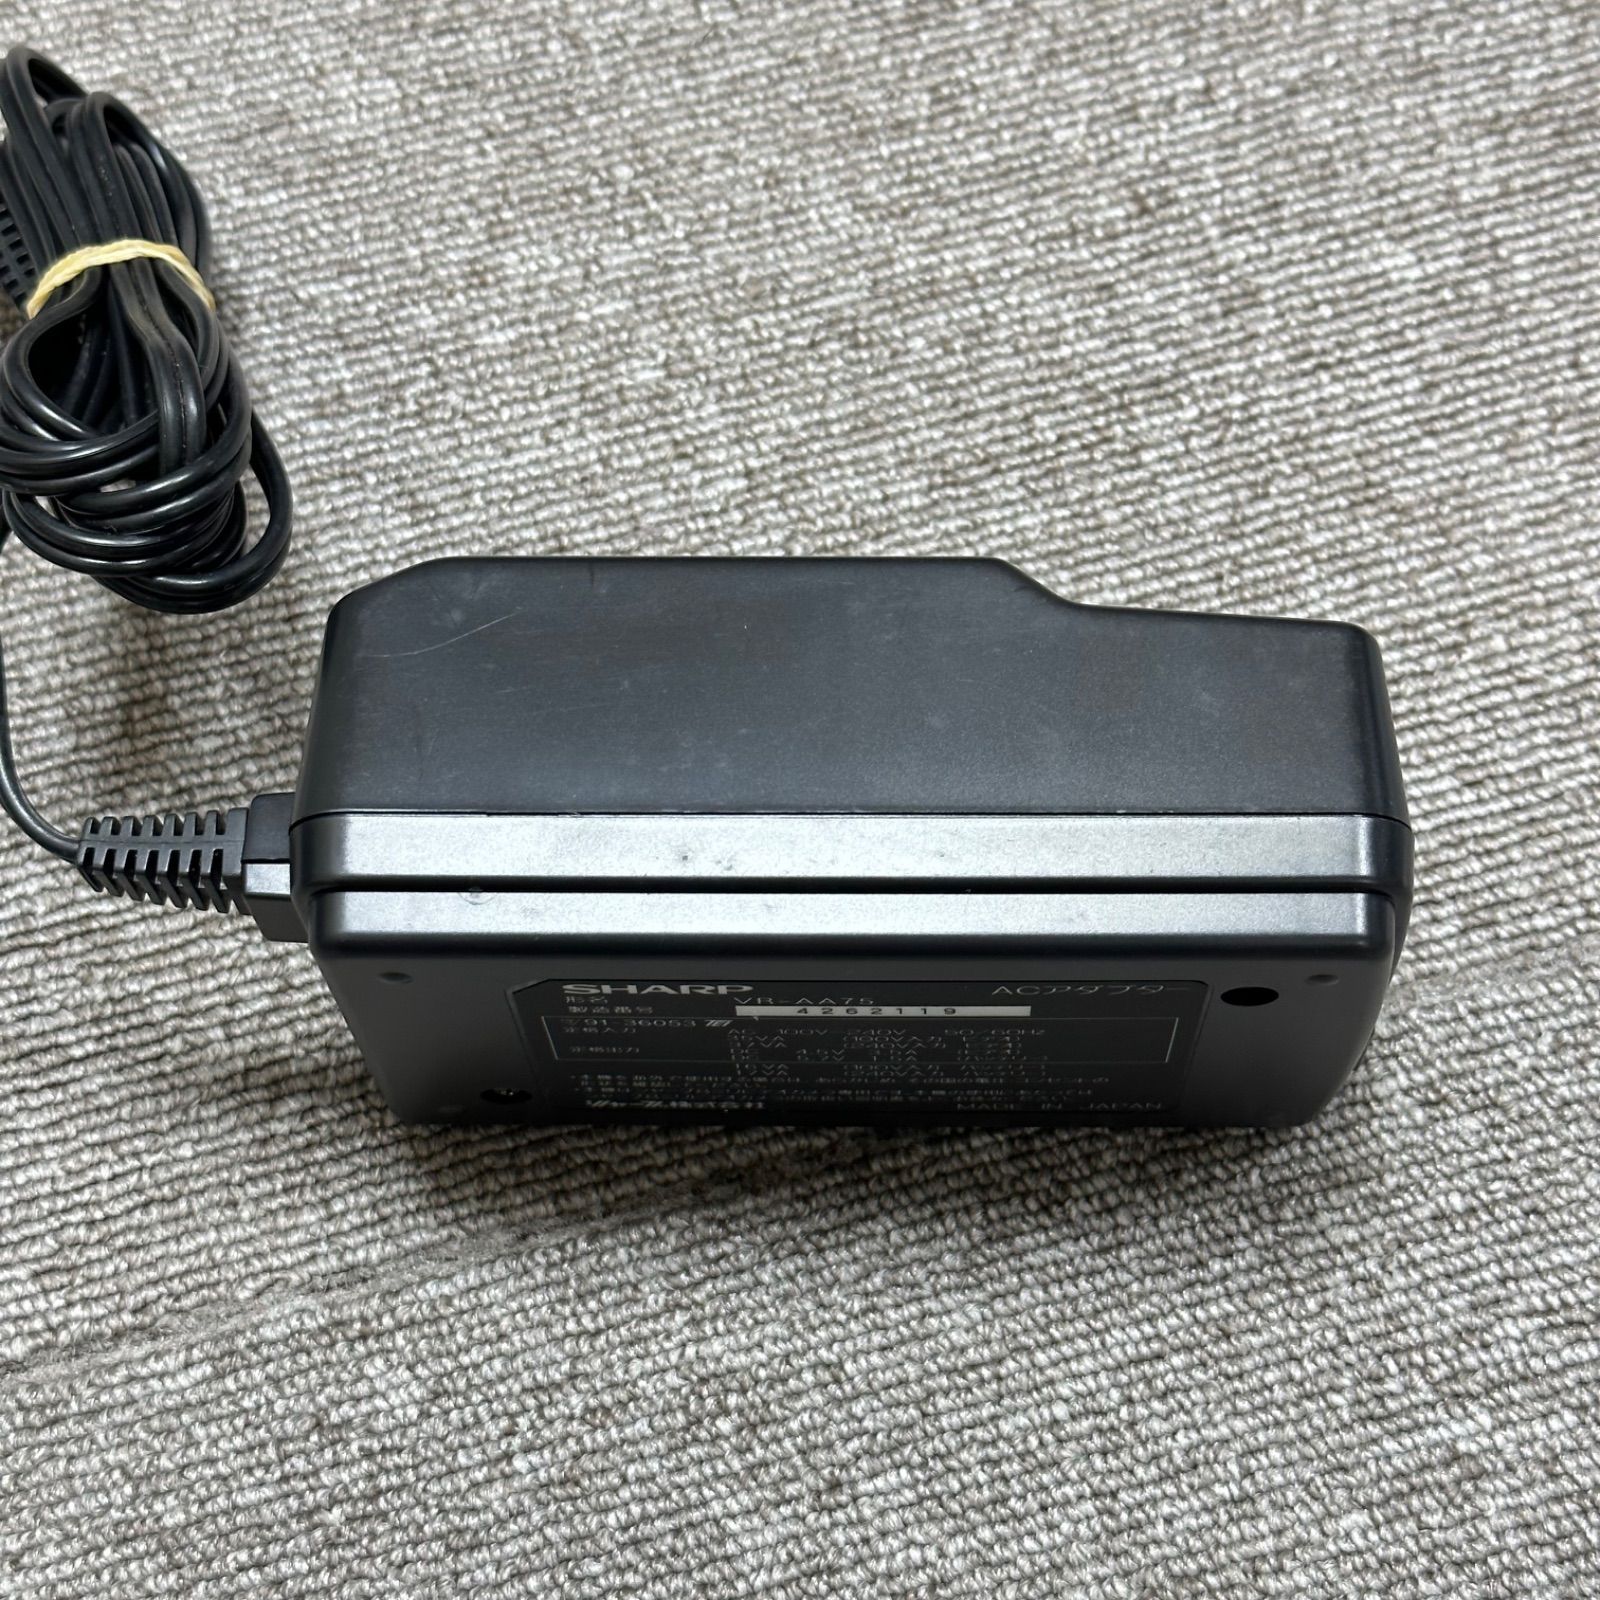 SHARP VR-AA75 シャープ 純正 充電器 チャージャー バッテリーチャージャー ビューカム 8mm 8ミリ 液晶ビューカム ビデオカメラ  カメラ 1011-1222 - メルカリ